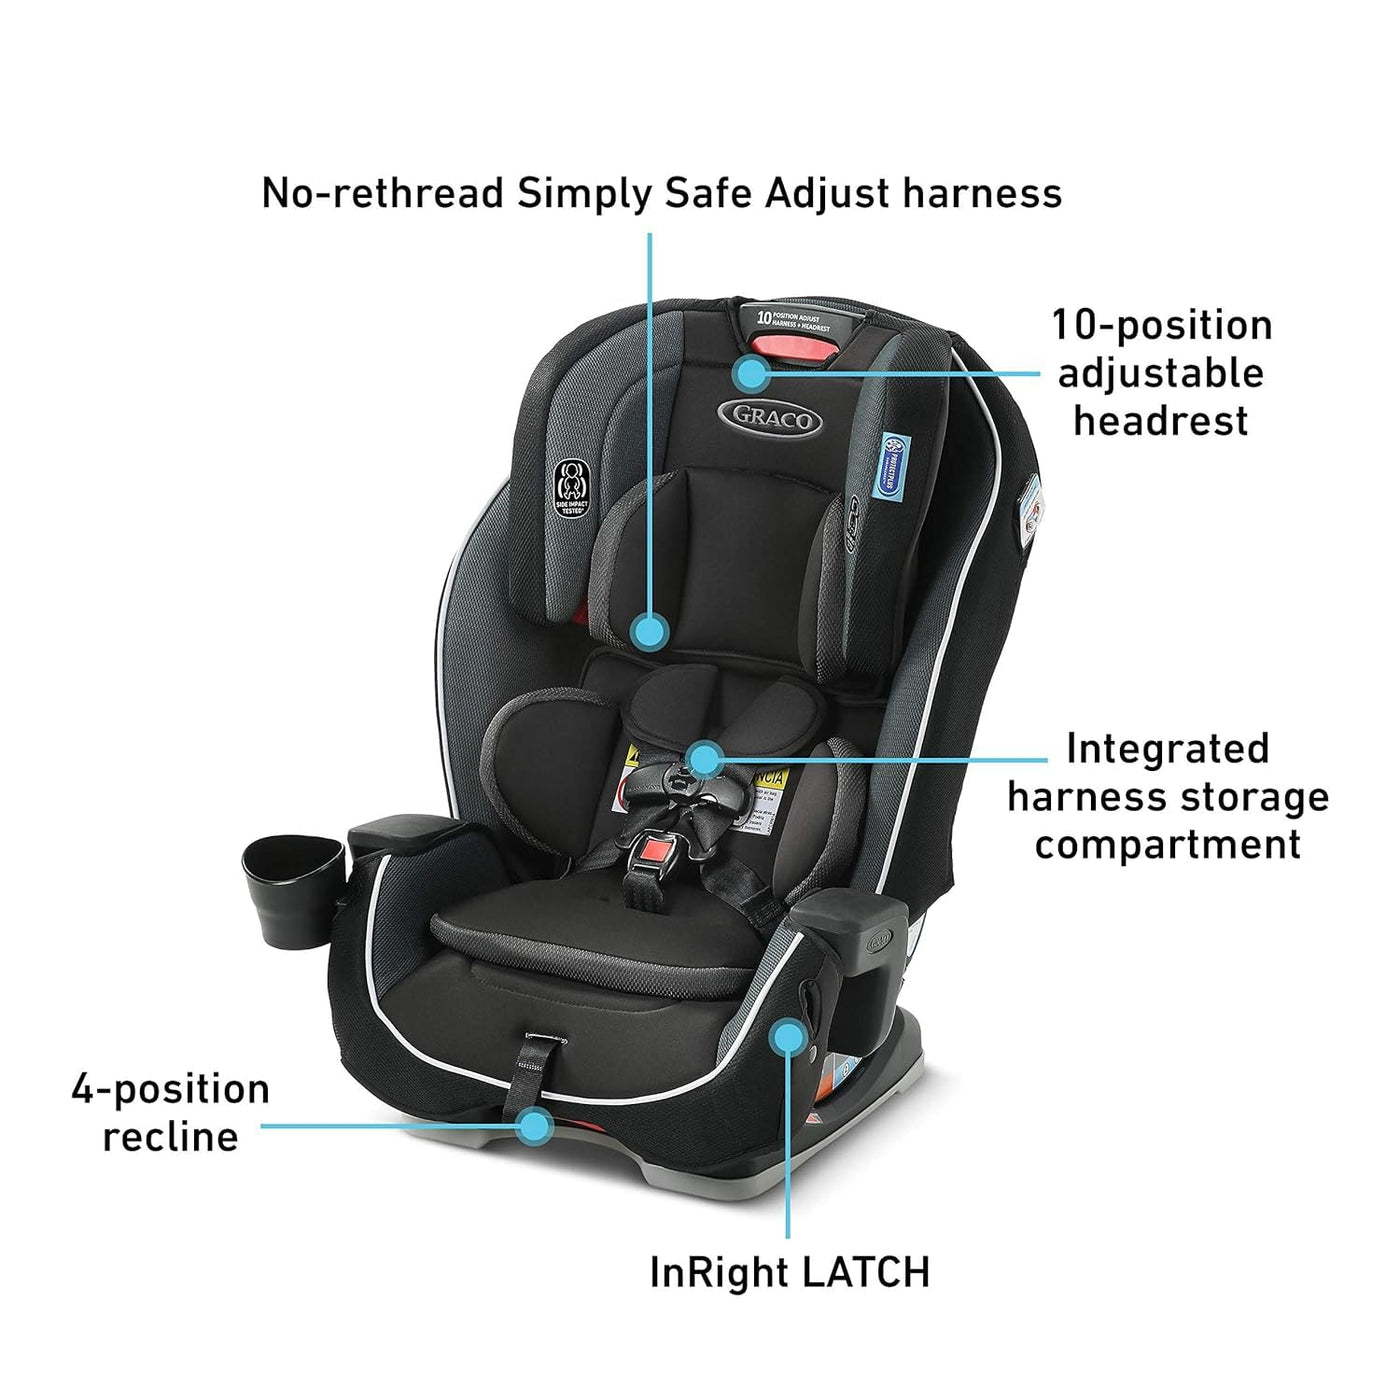 Graco Milestone 3 in 1 Car Seat, Infant to Toddler Car Seat Kline